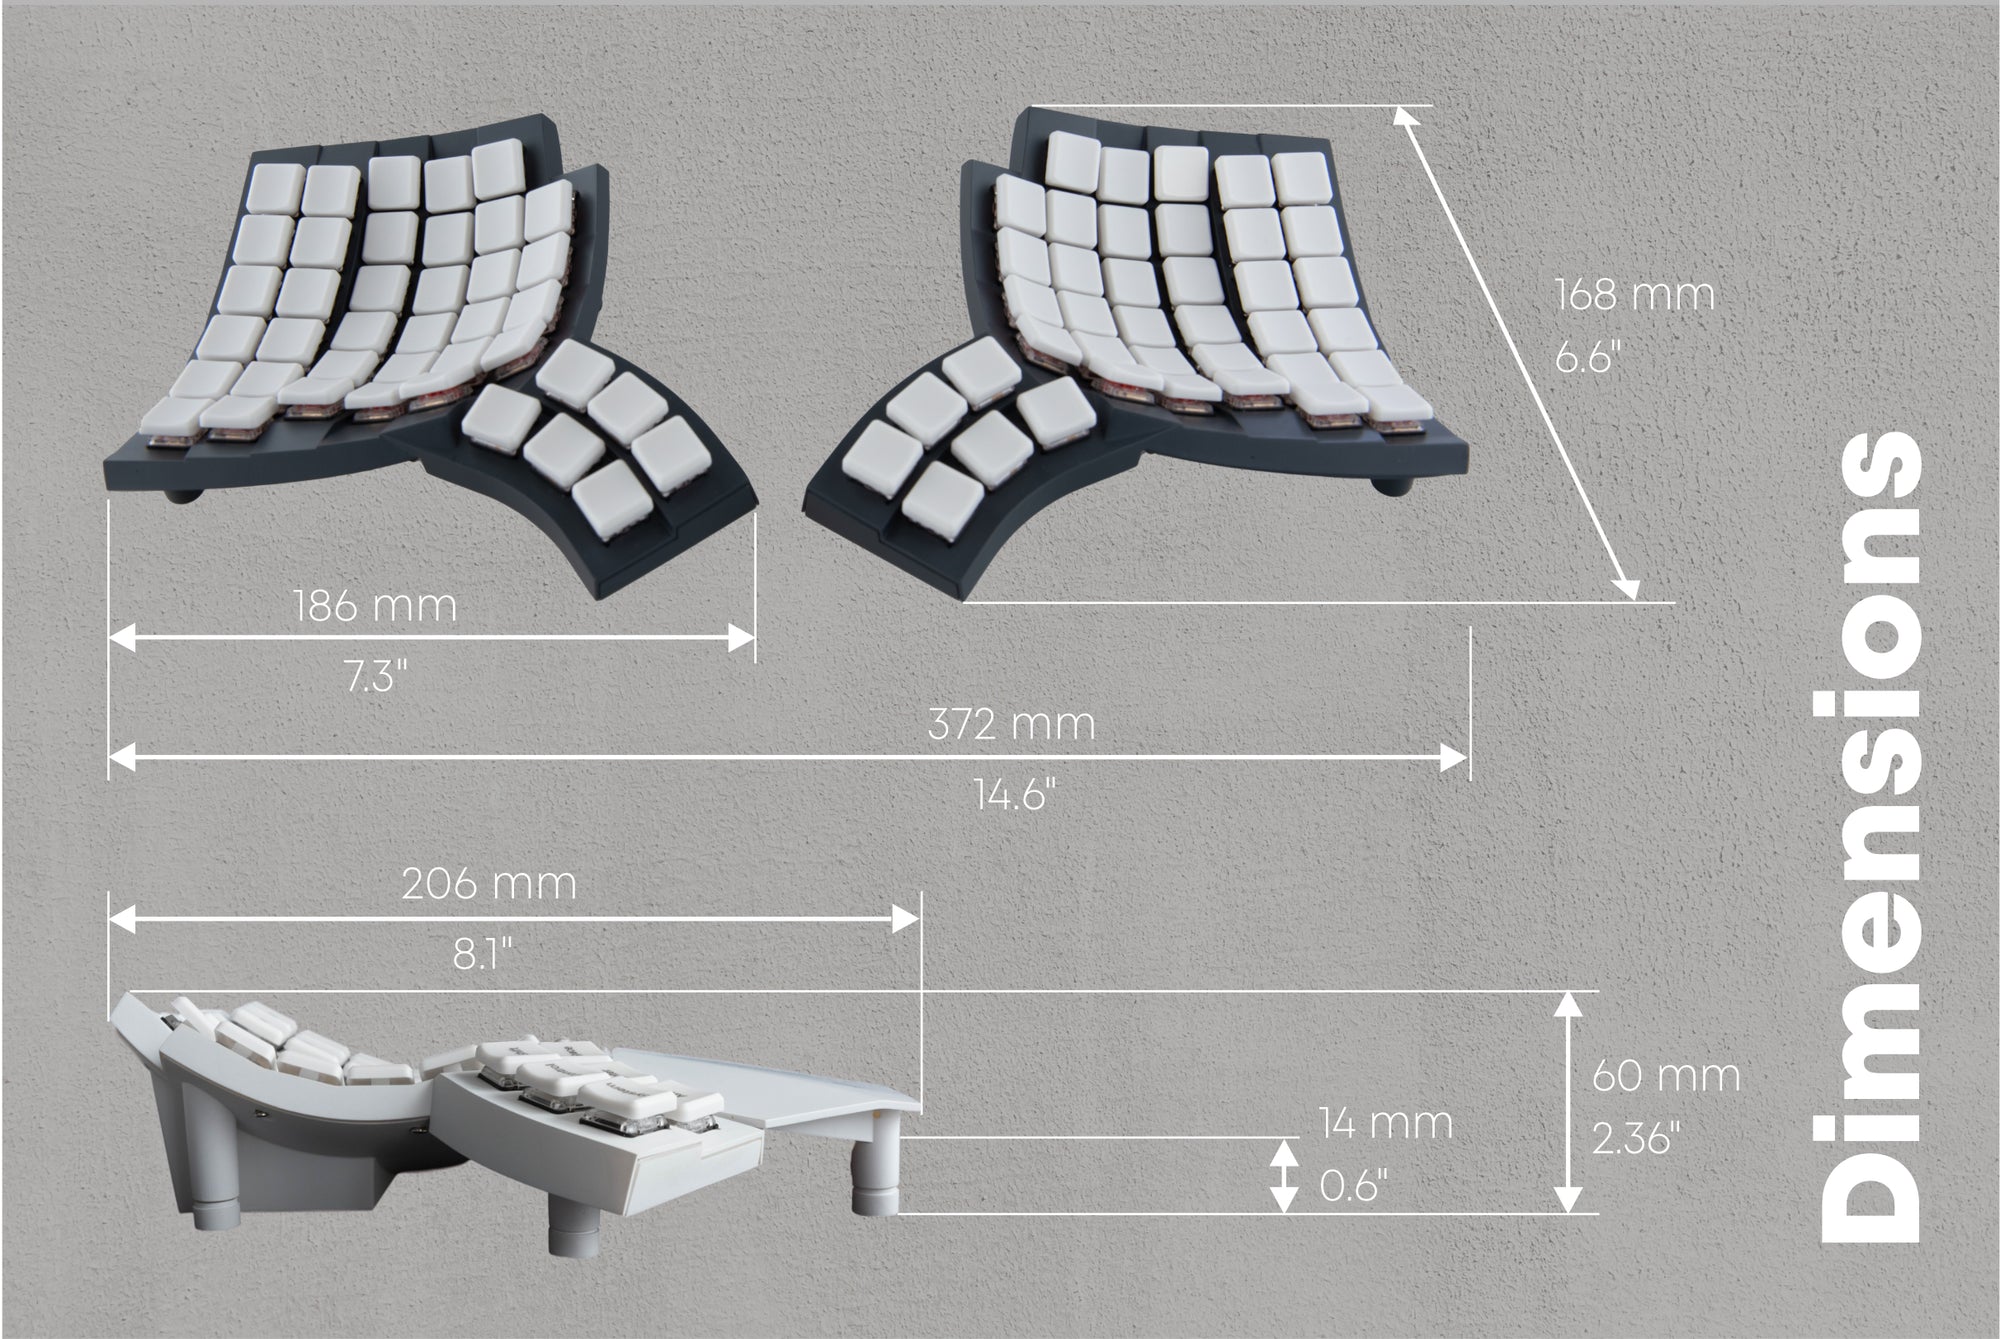 Technical breakdown showing dimensions of Glove80 ergonomic keyboard